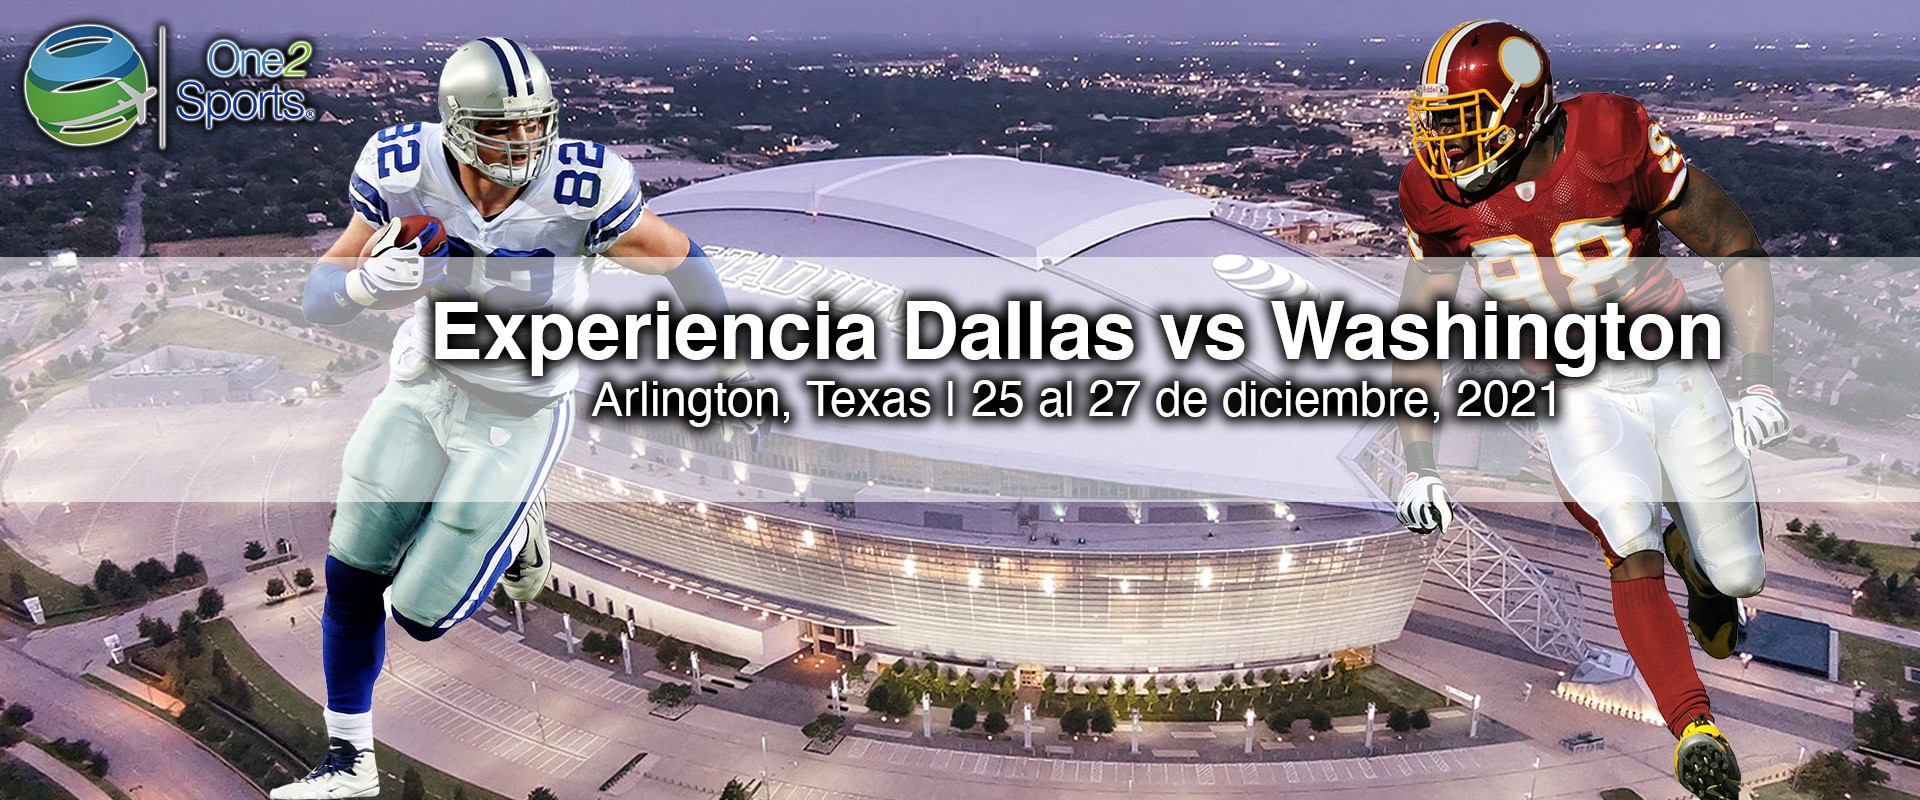 Dallas vs Washington One2 Travel Group